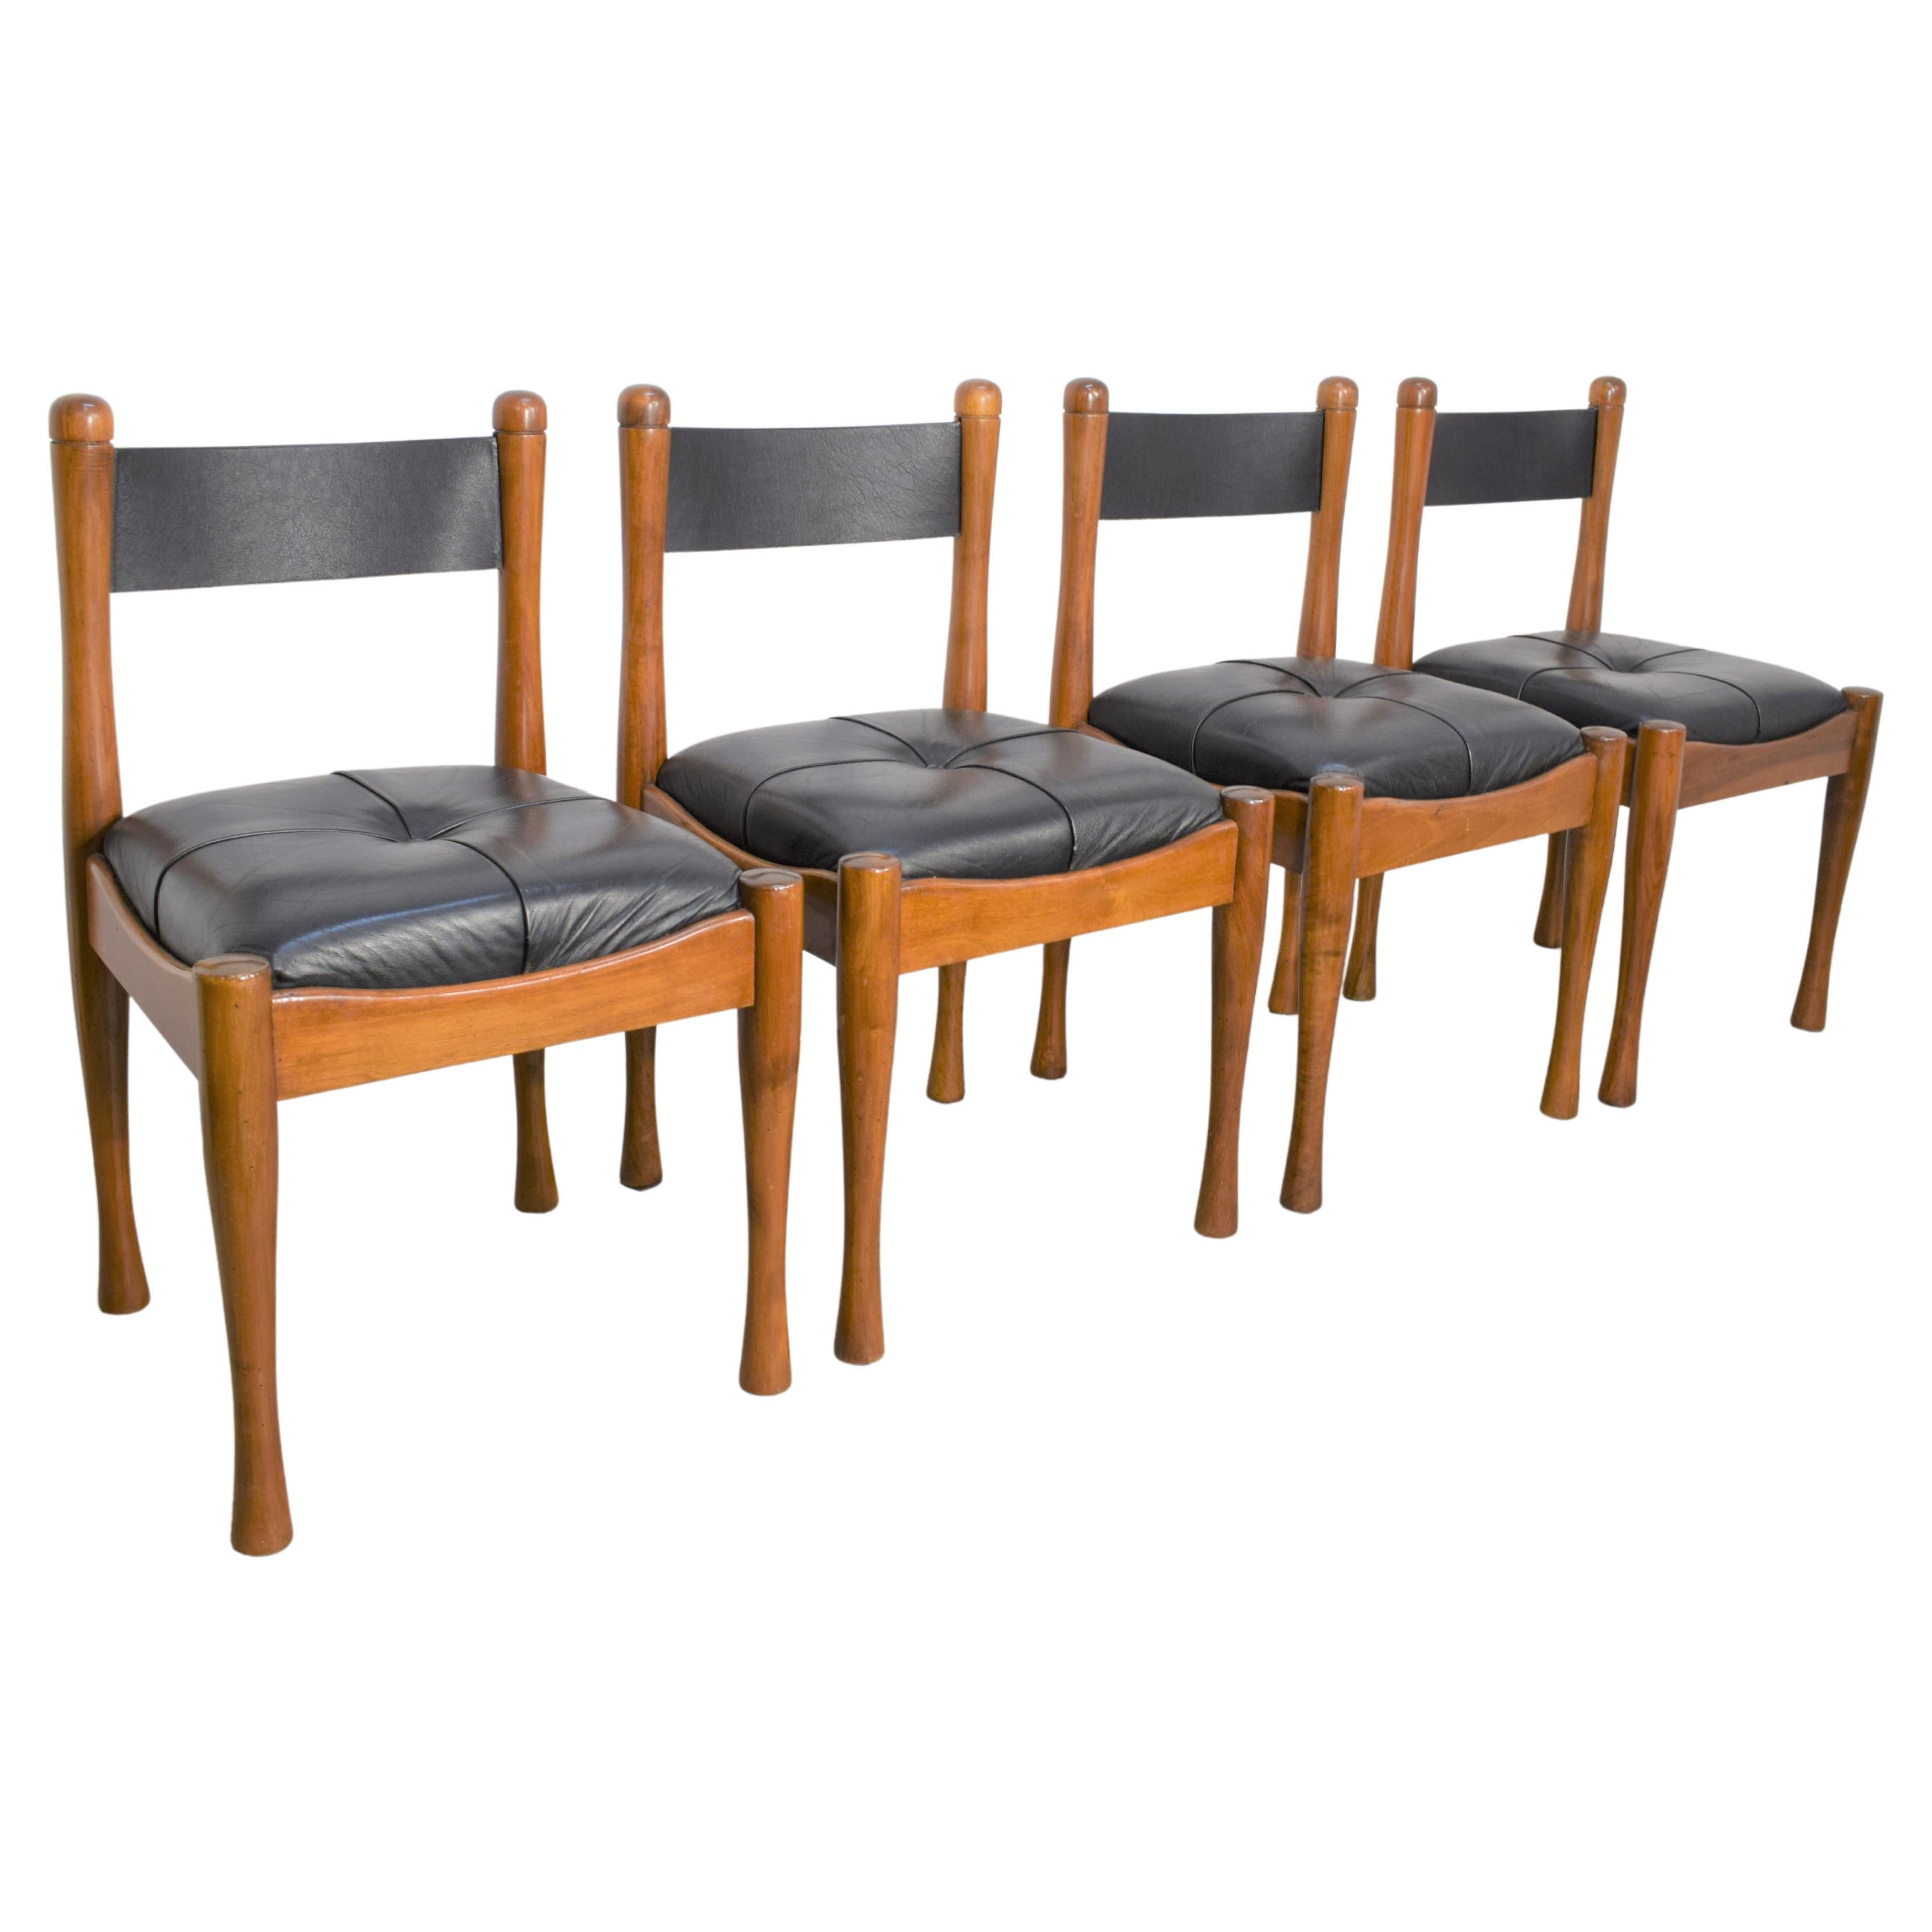 Set of 4 chairs by Silvio Coppola for Bernini, 1960s.

Dimensions: H= 82 cm; W= 45 cm; D= 46 cm; H seat= 47 cm.